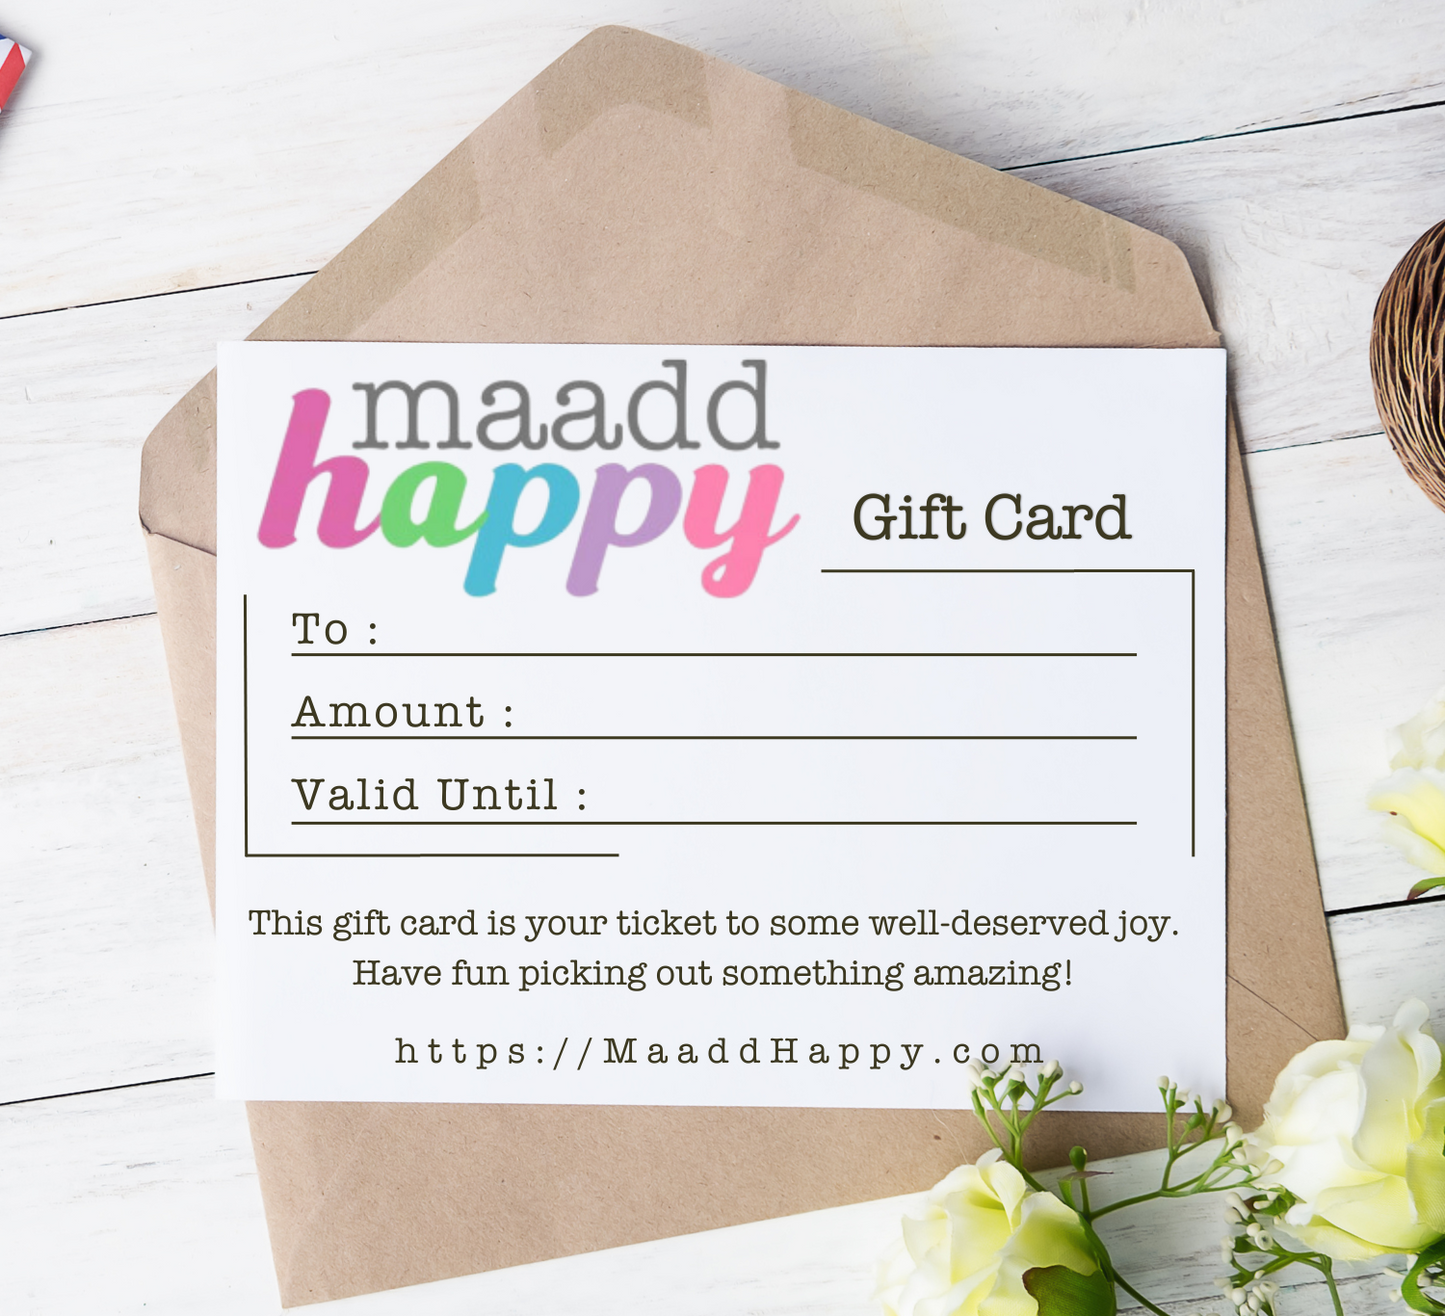 The MAADDHappy Gift Card